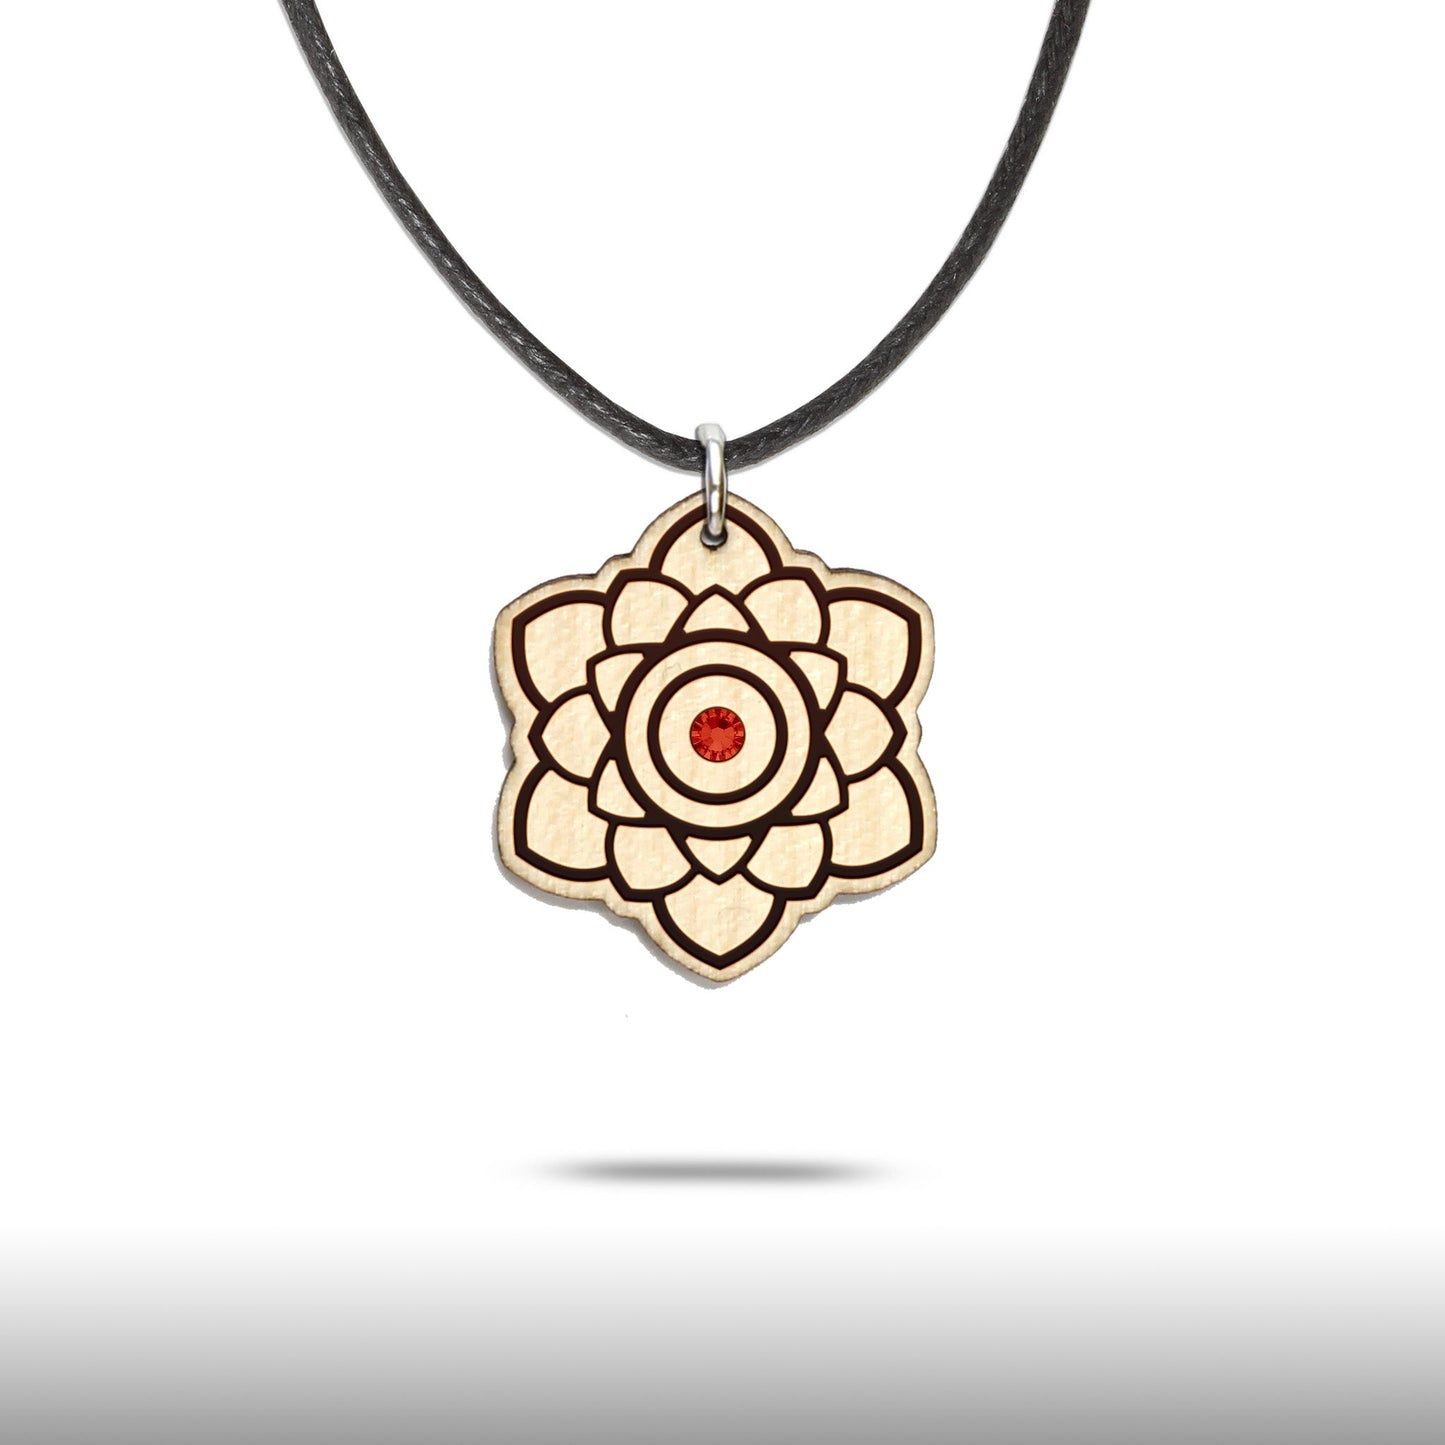 Halskette "Mandala" - Nanino Design Onlineshop -